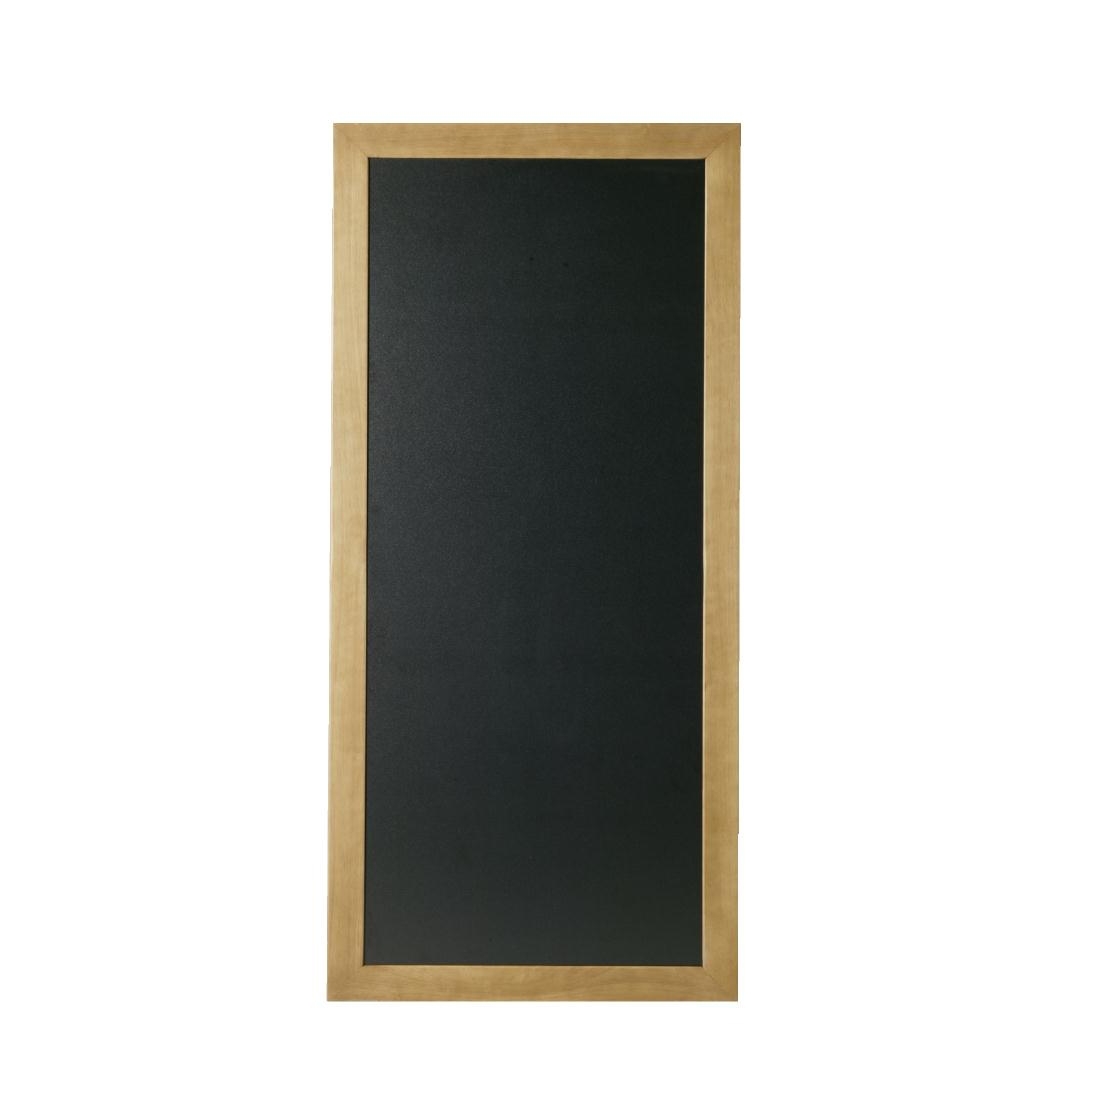 Securit Slim Wall Mounted Blackboard 1000 x 560mm Teak